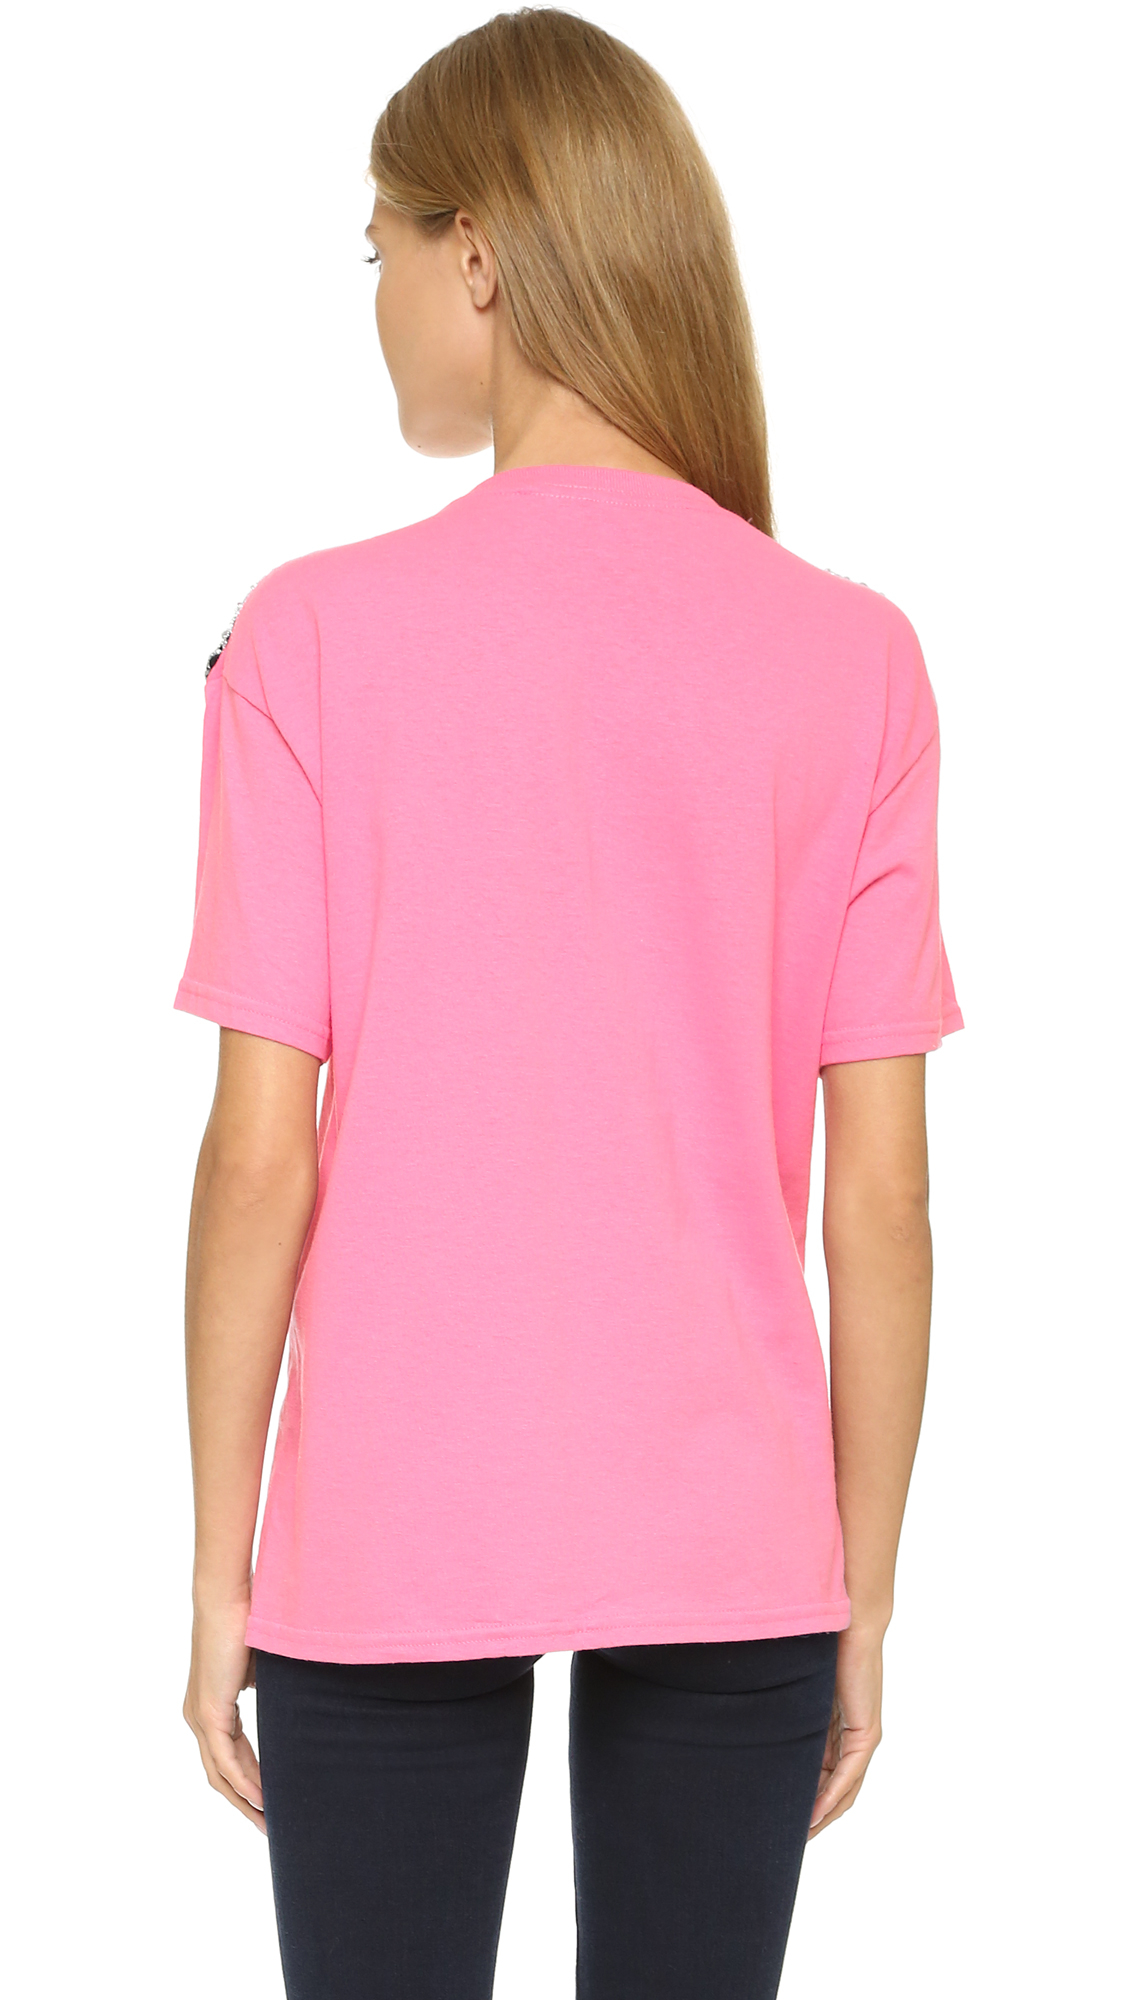 Lyst - Michaela Buerger Legs T-shirt - Flashy Pink in Pink